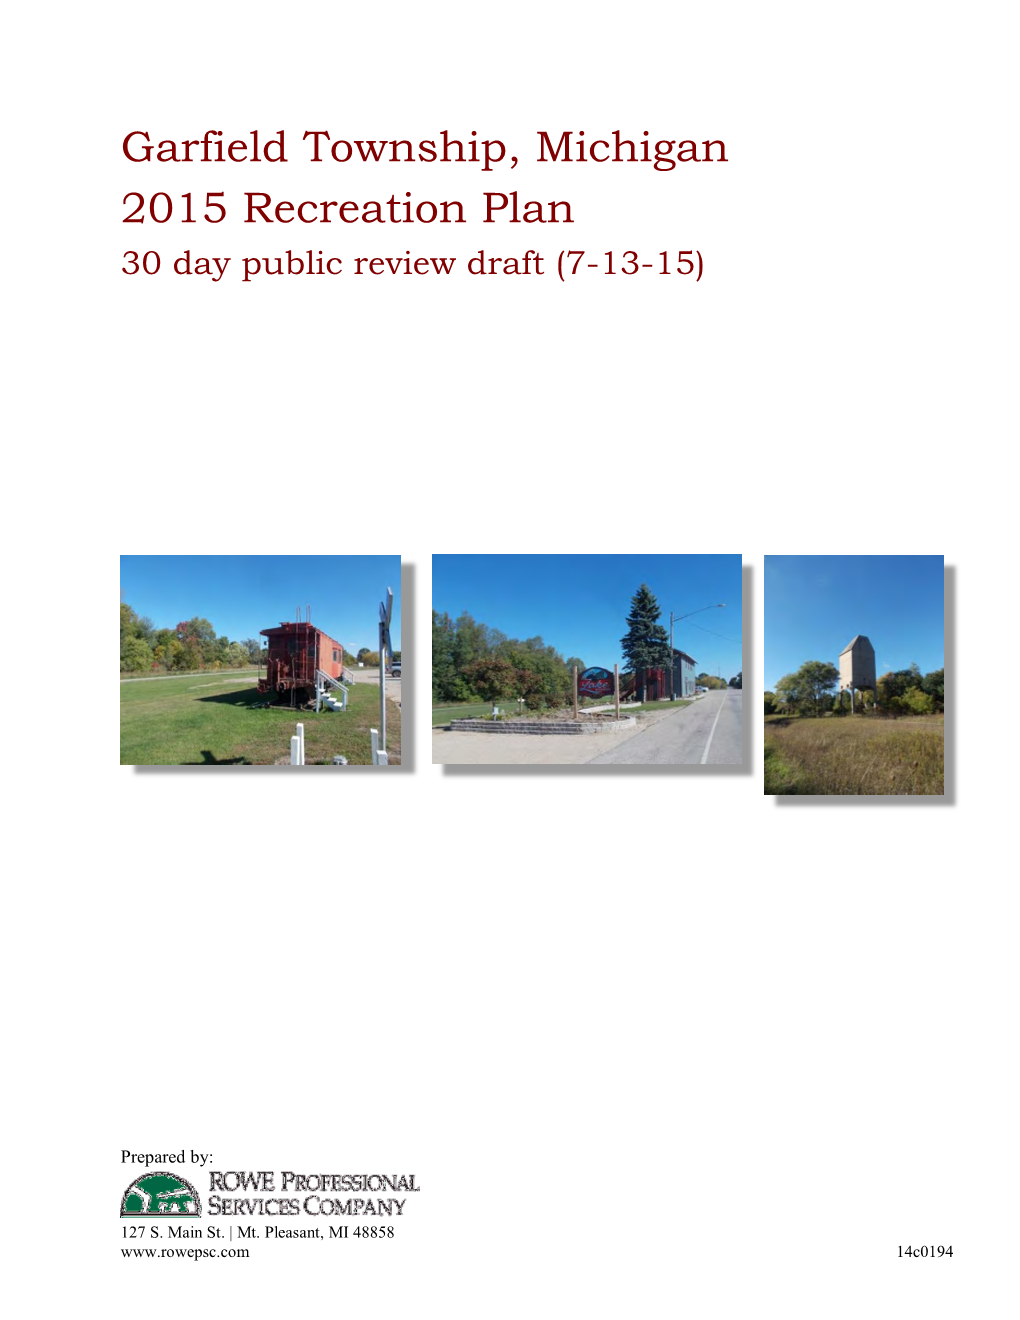 Lake Station Trailhead, Garfield Township: 2015 Recreation Plan